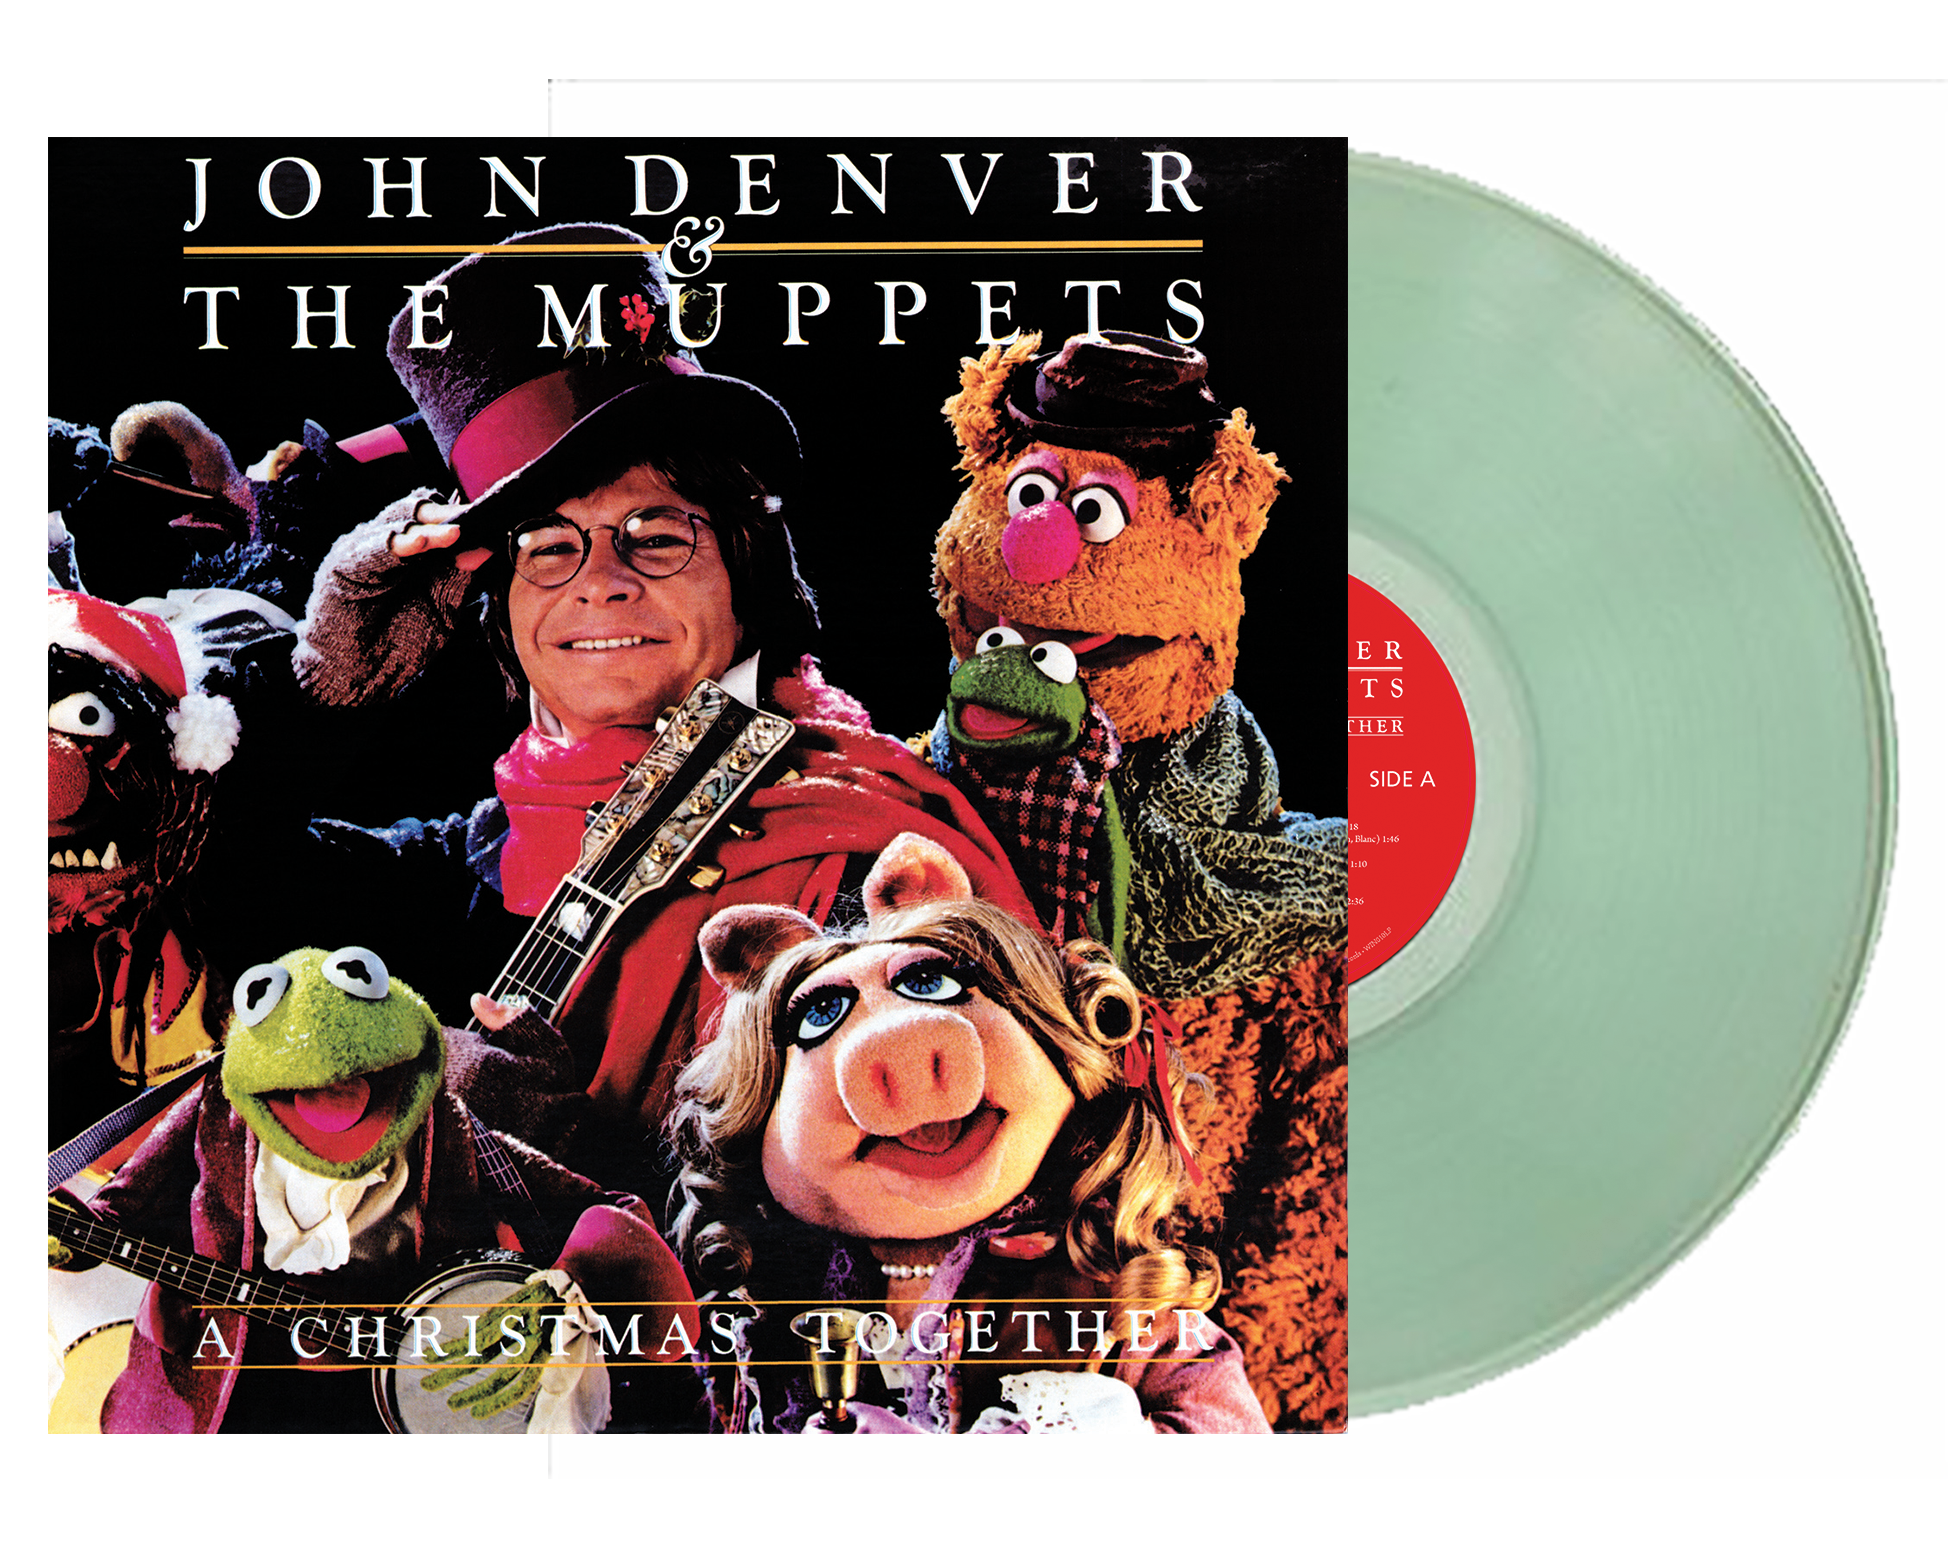 John Denver & The Muppets “A Christmas Together” Vinyl Reissue 